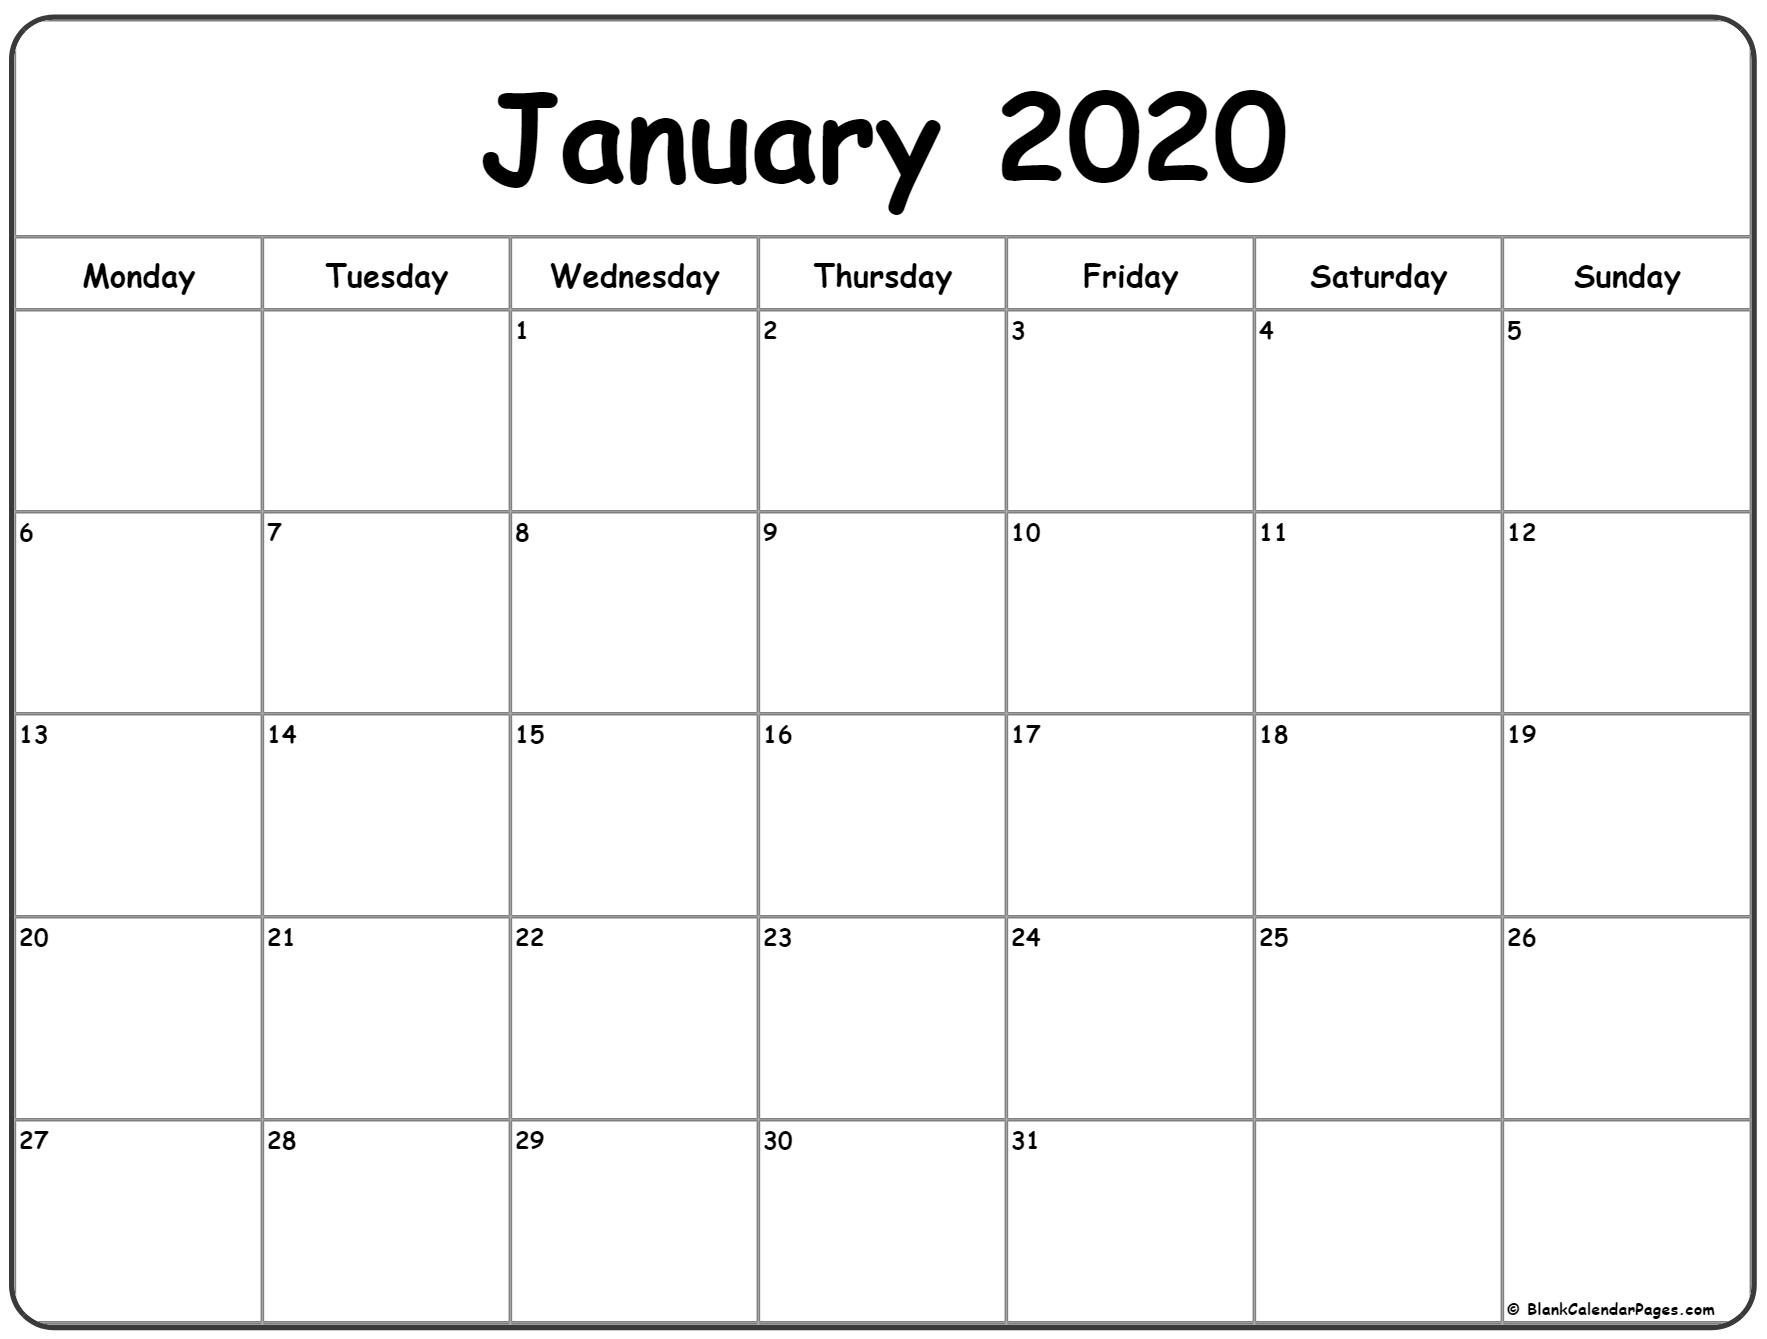 January 2020 Monday Calendar | Monday To Sunday Perky Blank Calendar With Monday Start